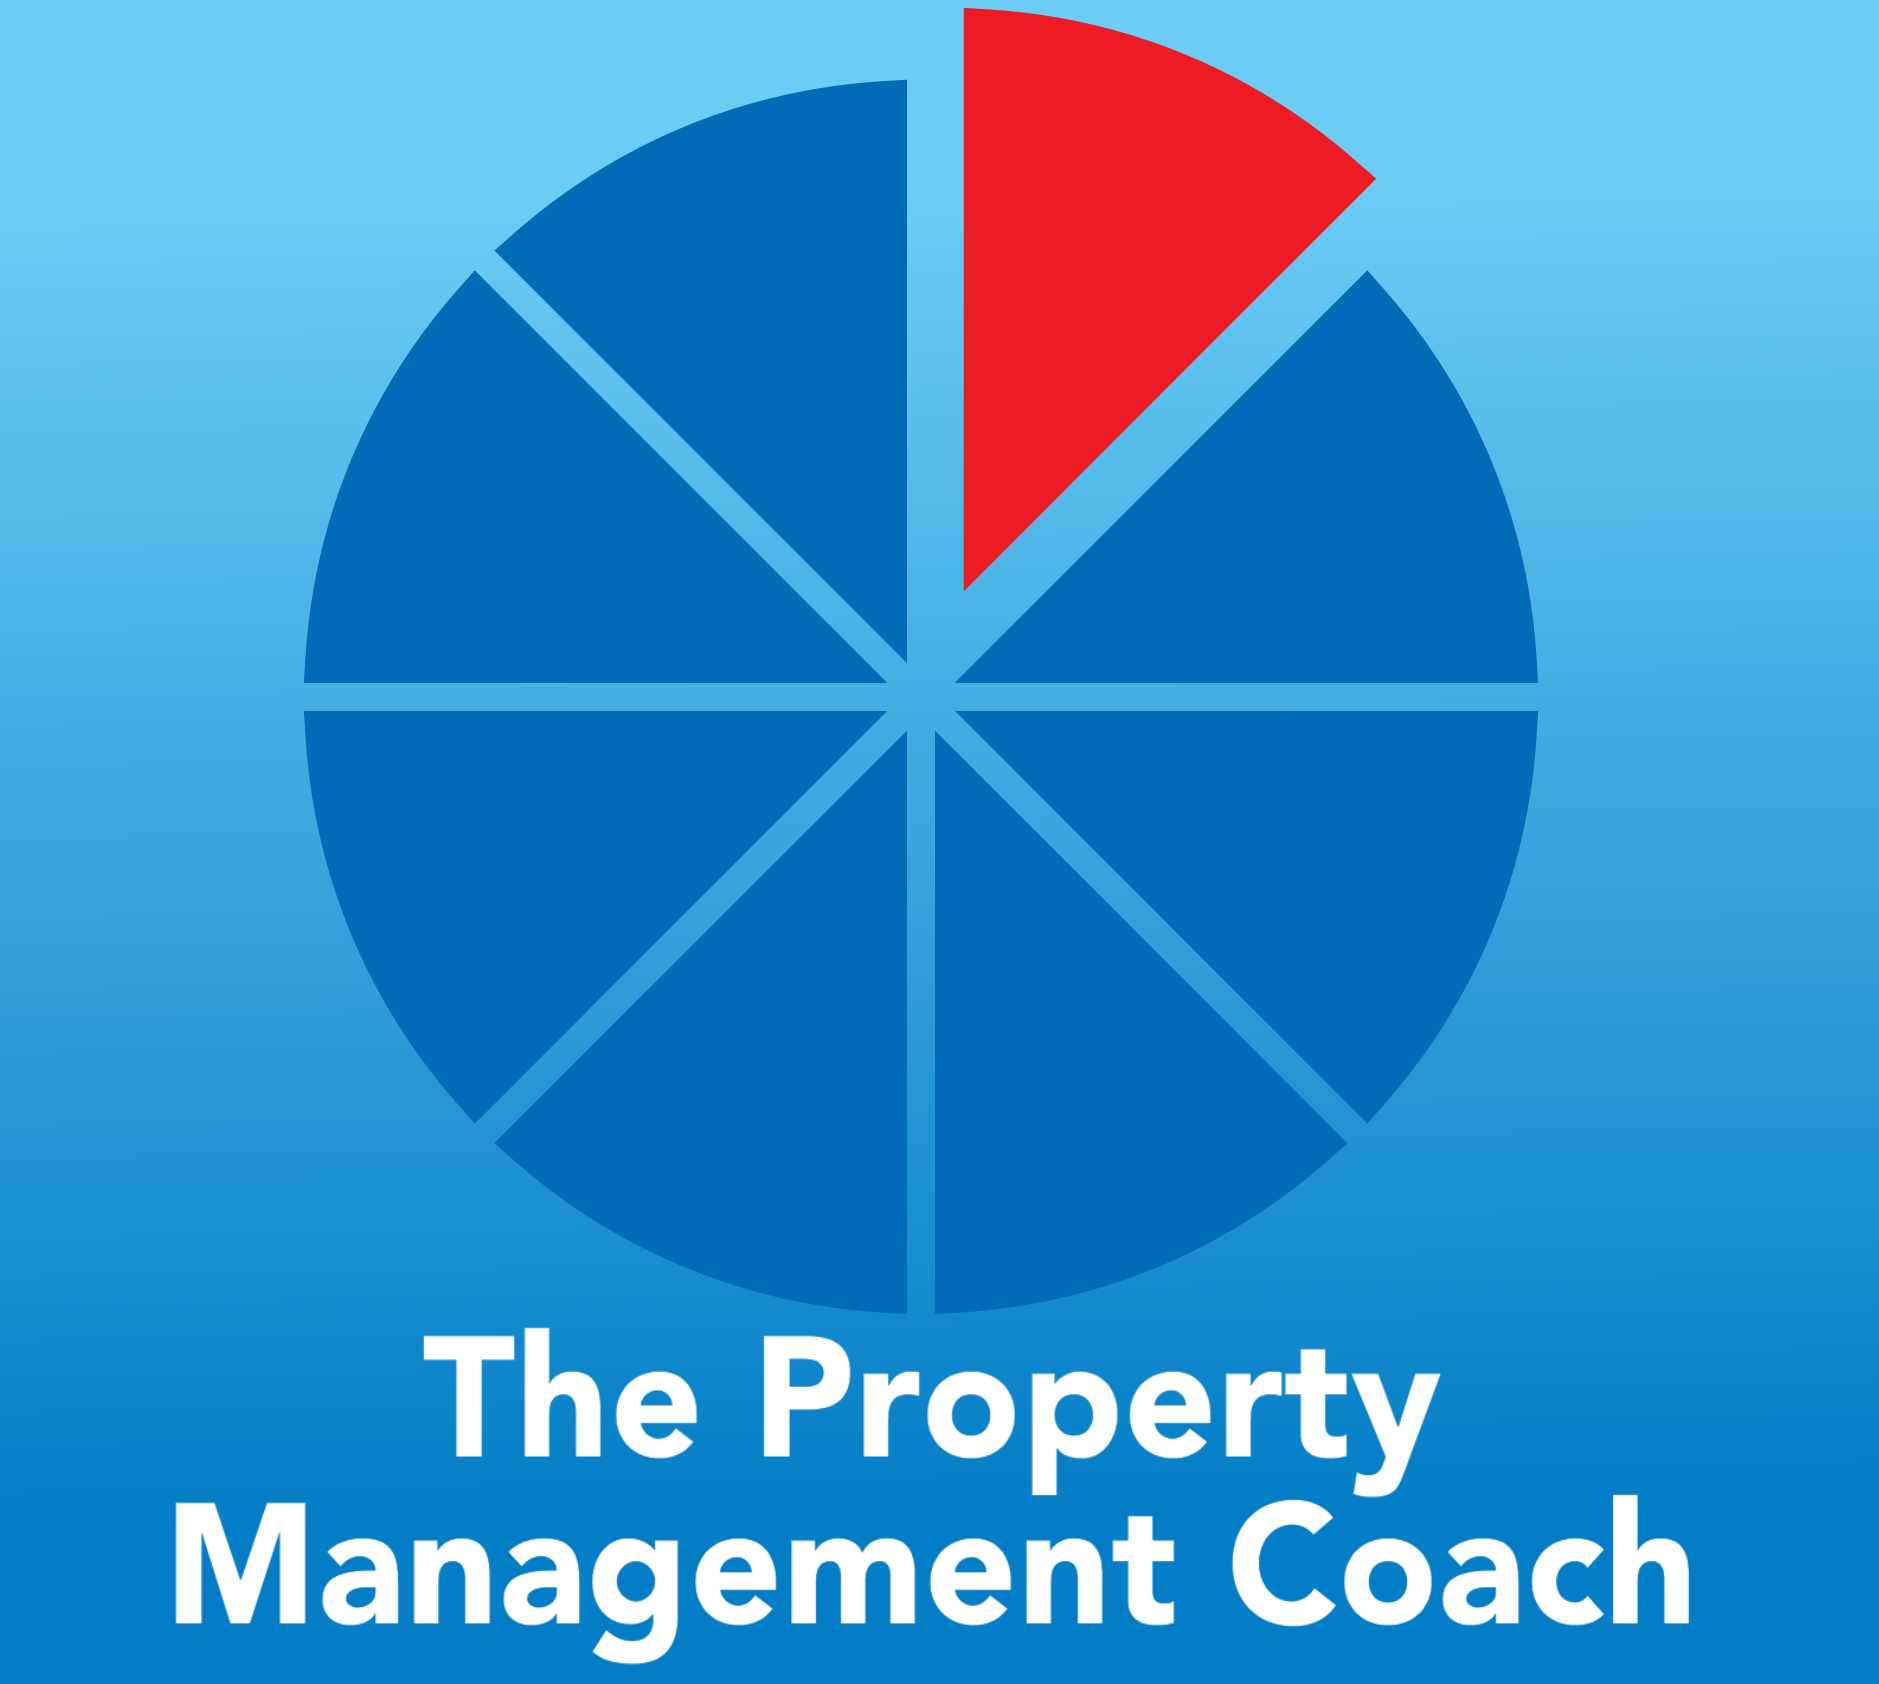 The Property Management Coach Logo